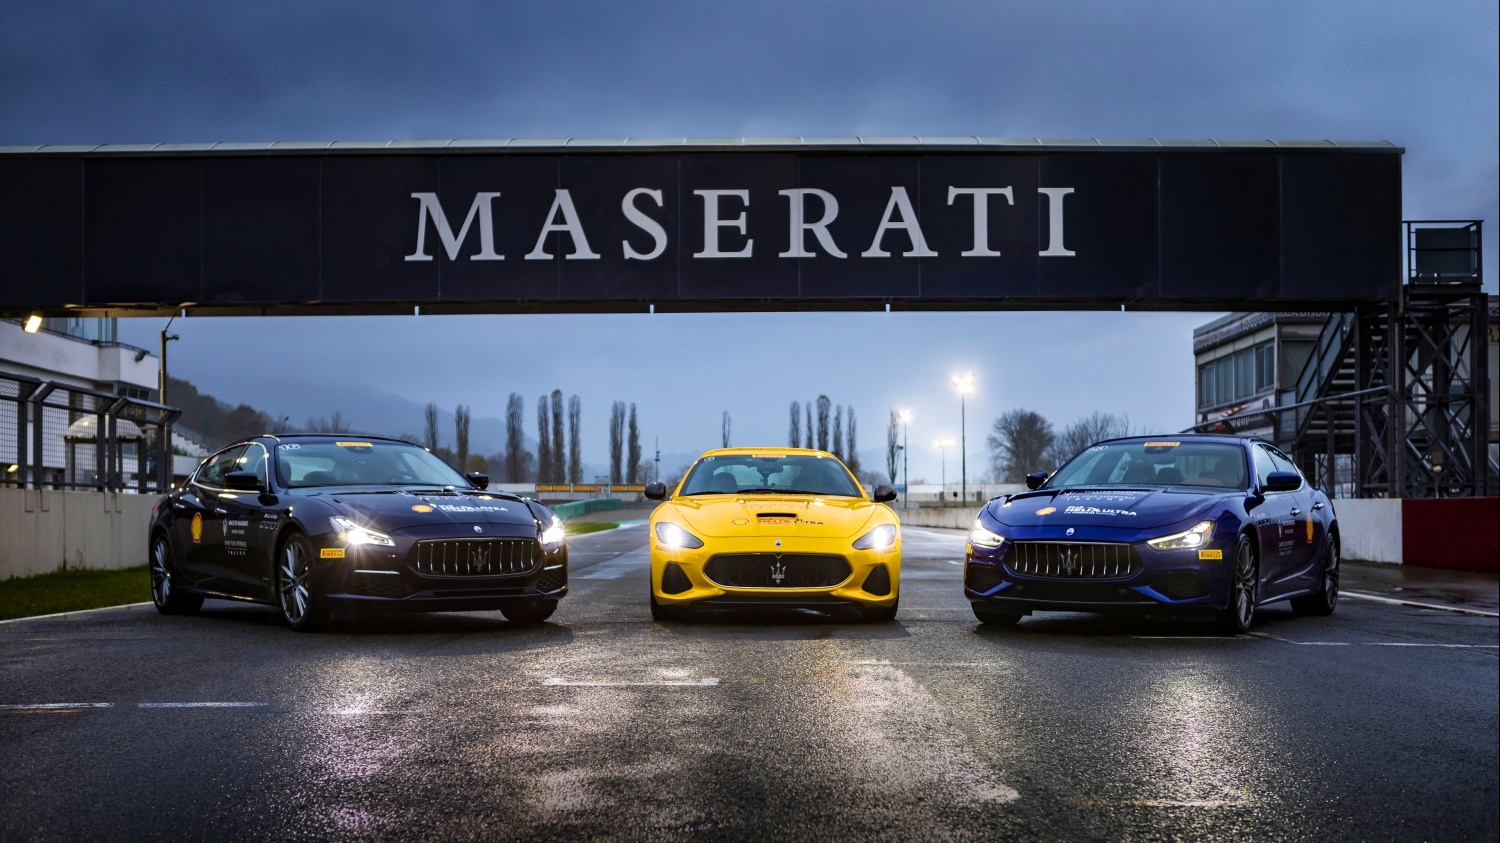 The new season of Master Maserati programme gets underway